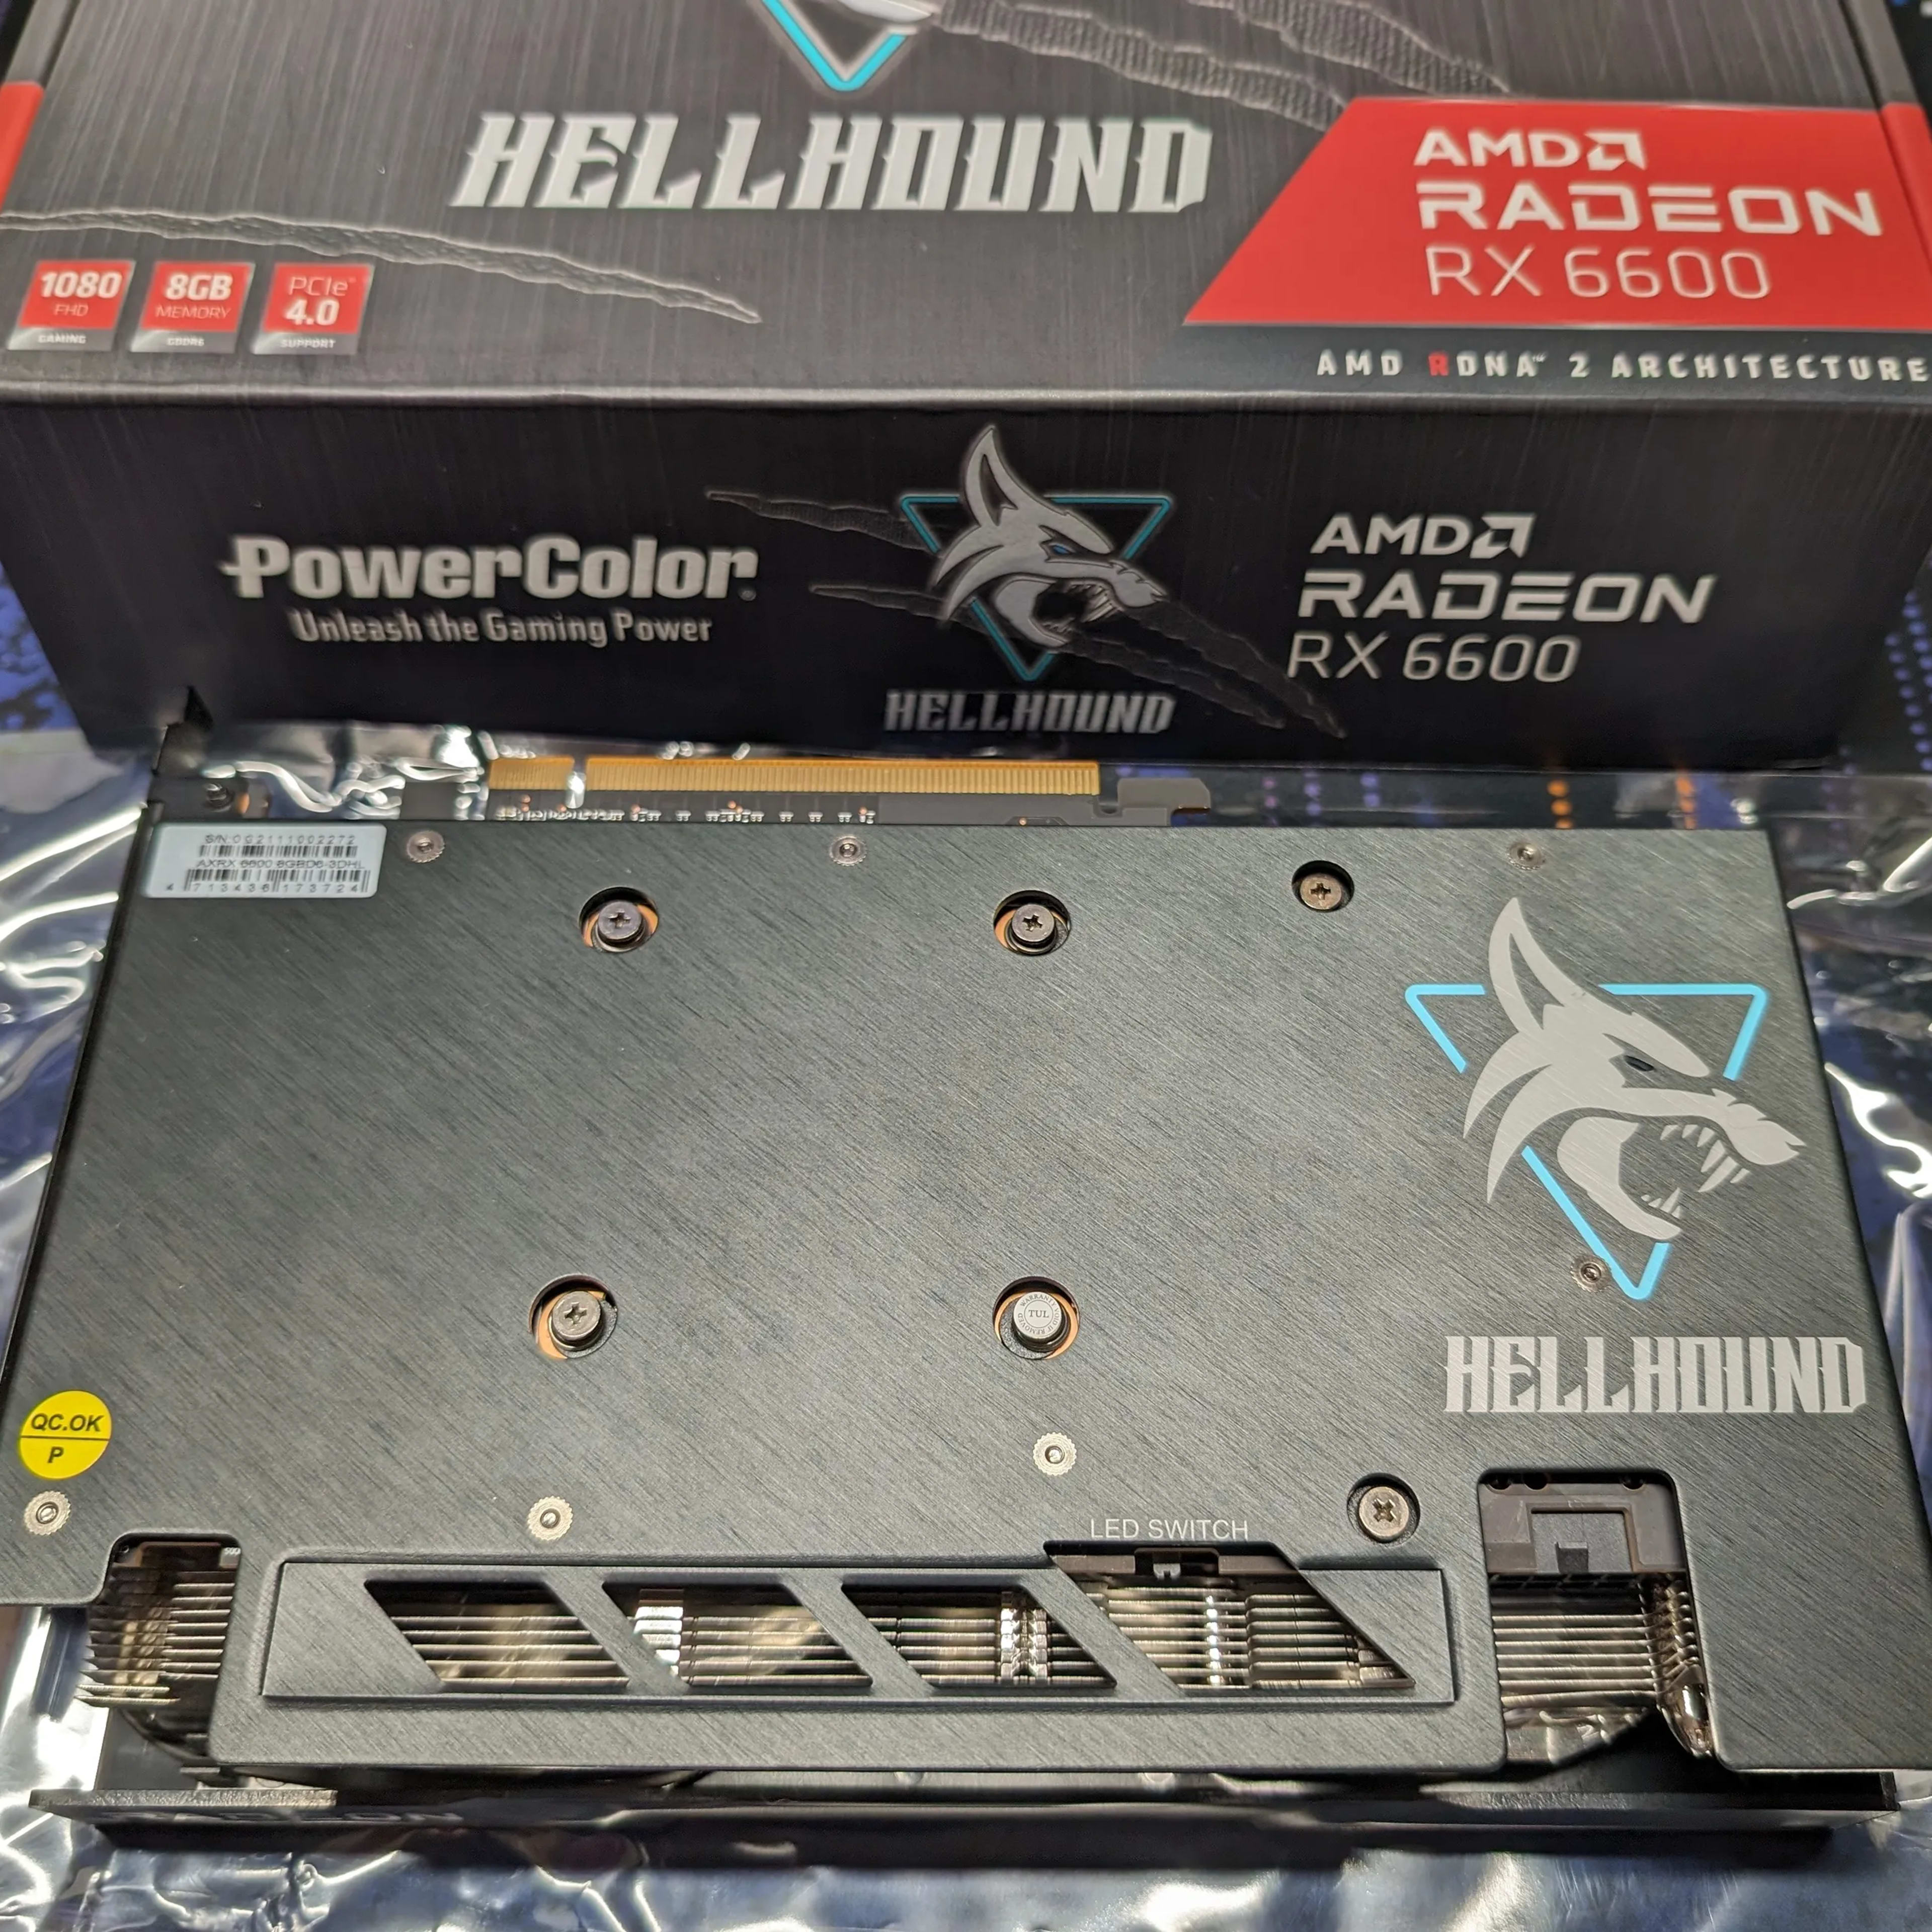 PowerColor Hellhound Radeon RX 6600 8GB GDDR6 Graphics Card - Used, Good Condition